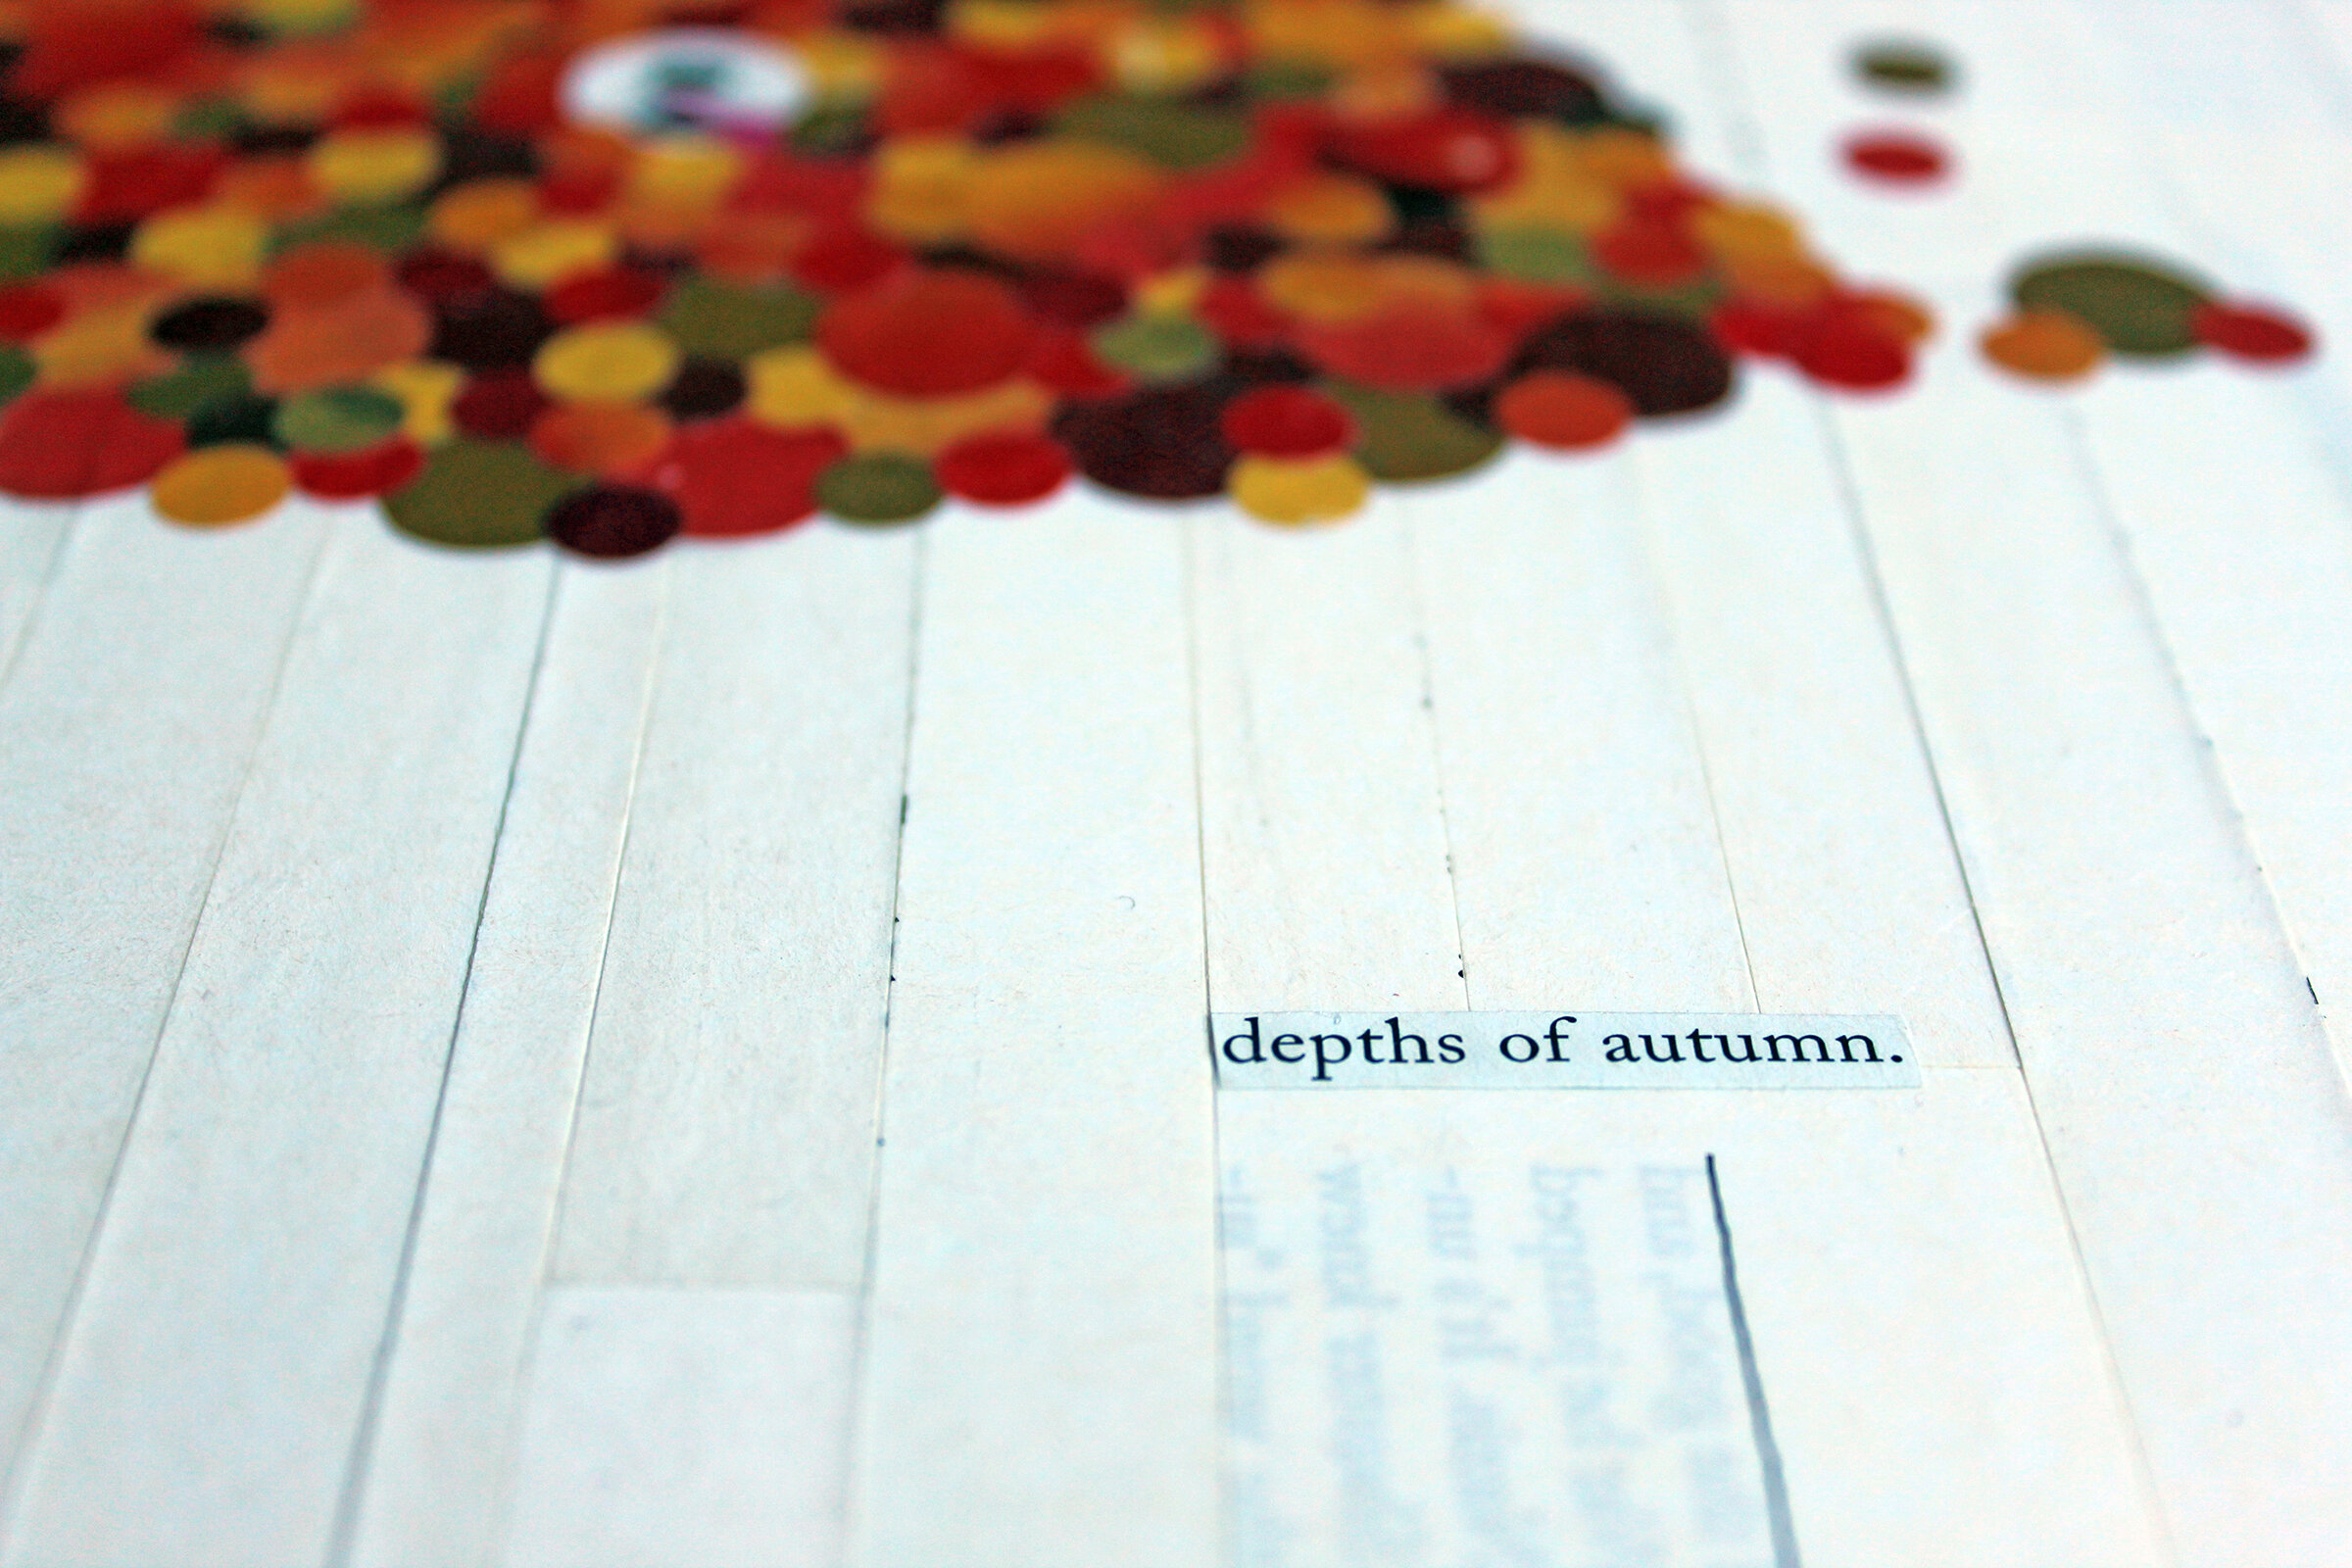  Detail – “depths of autumn.” 